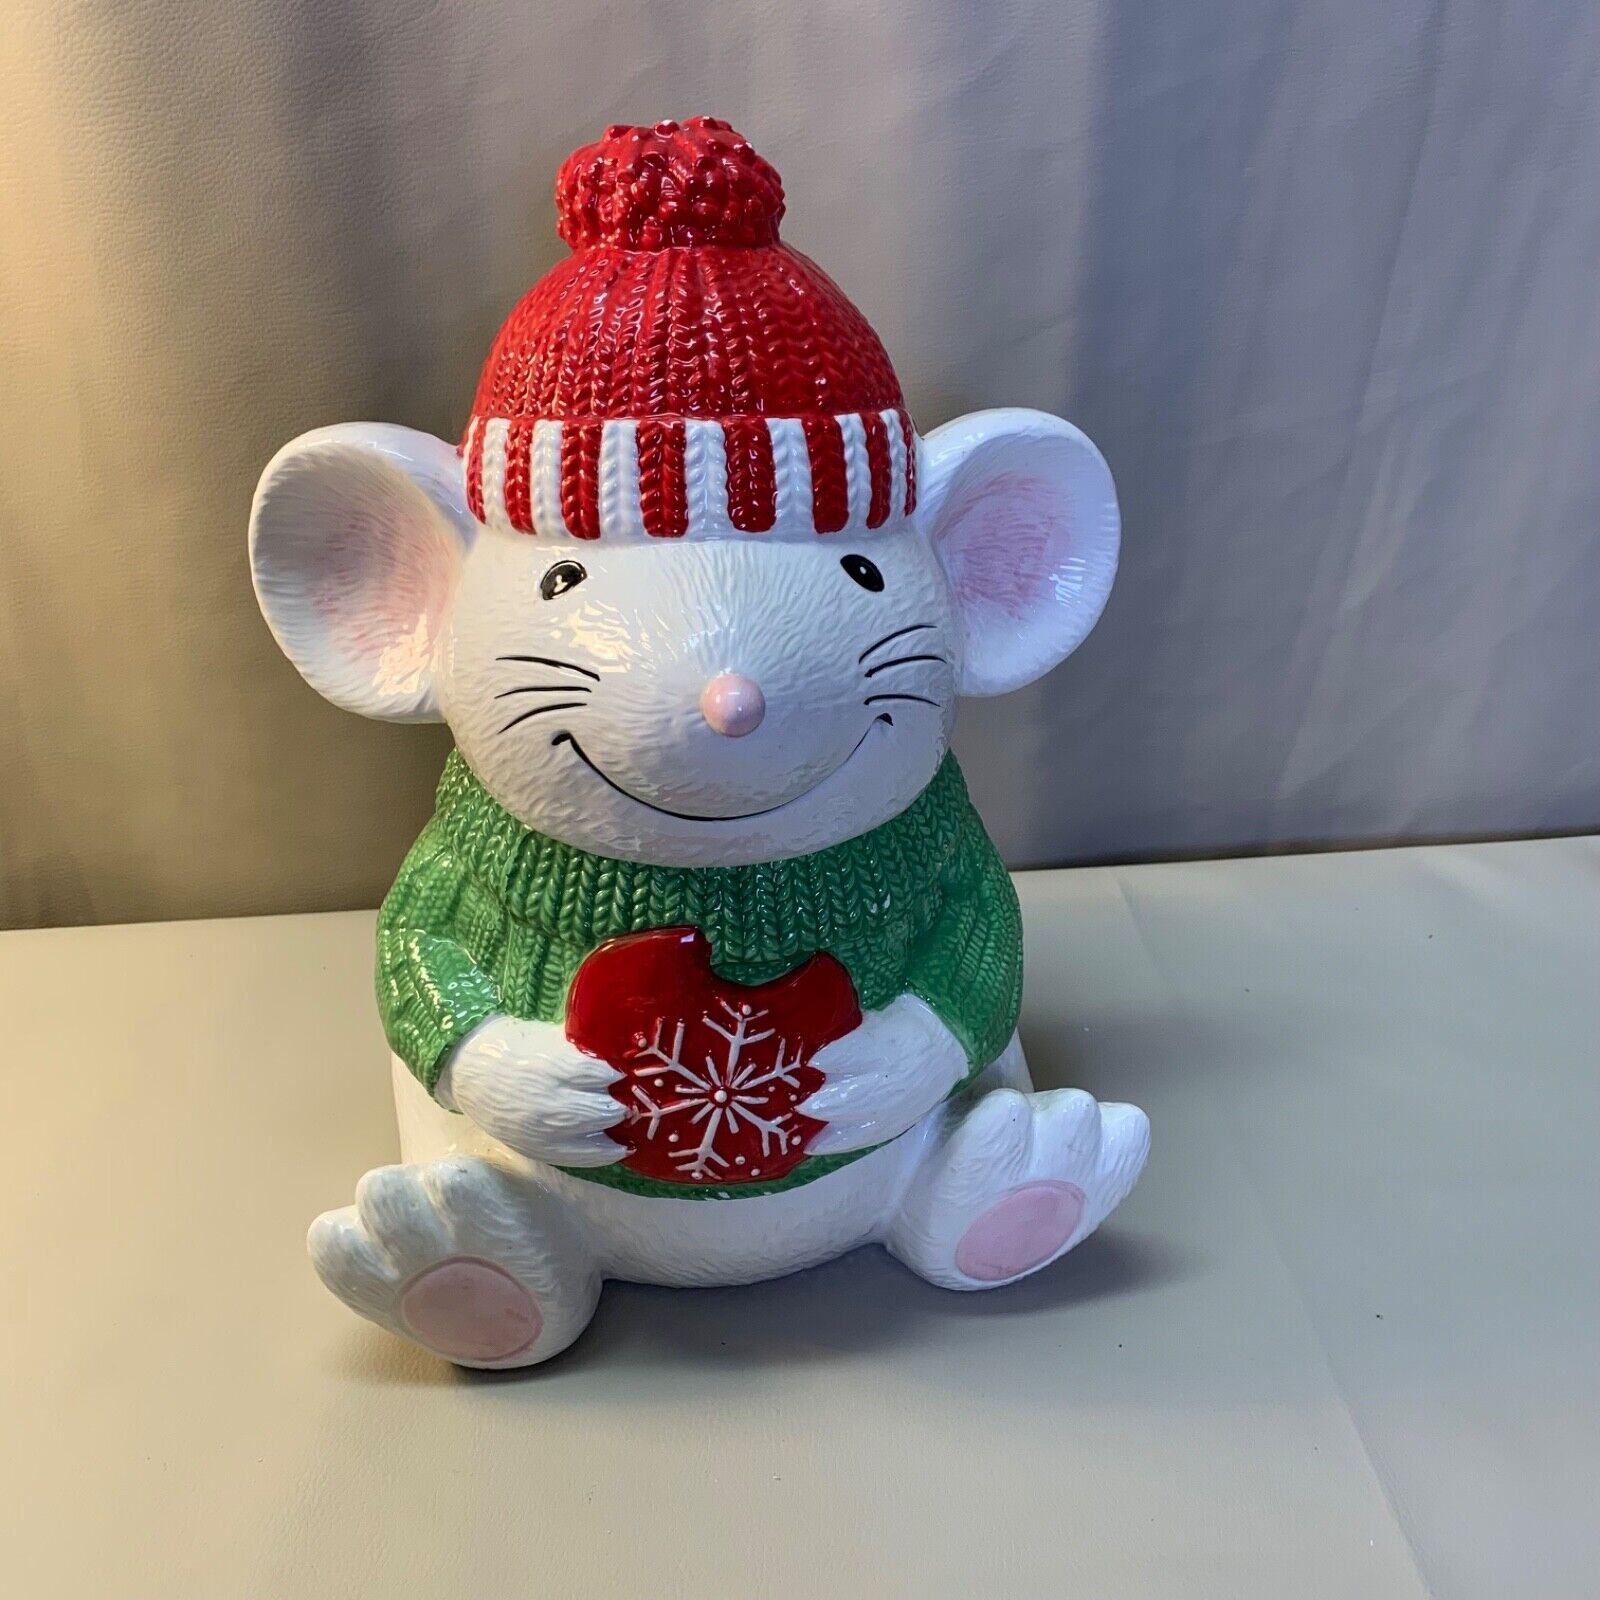 Homeworx Mouse Cookie Jar by Harry Slatkin Simply Adorable